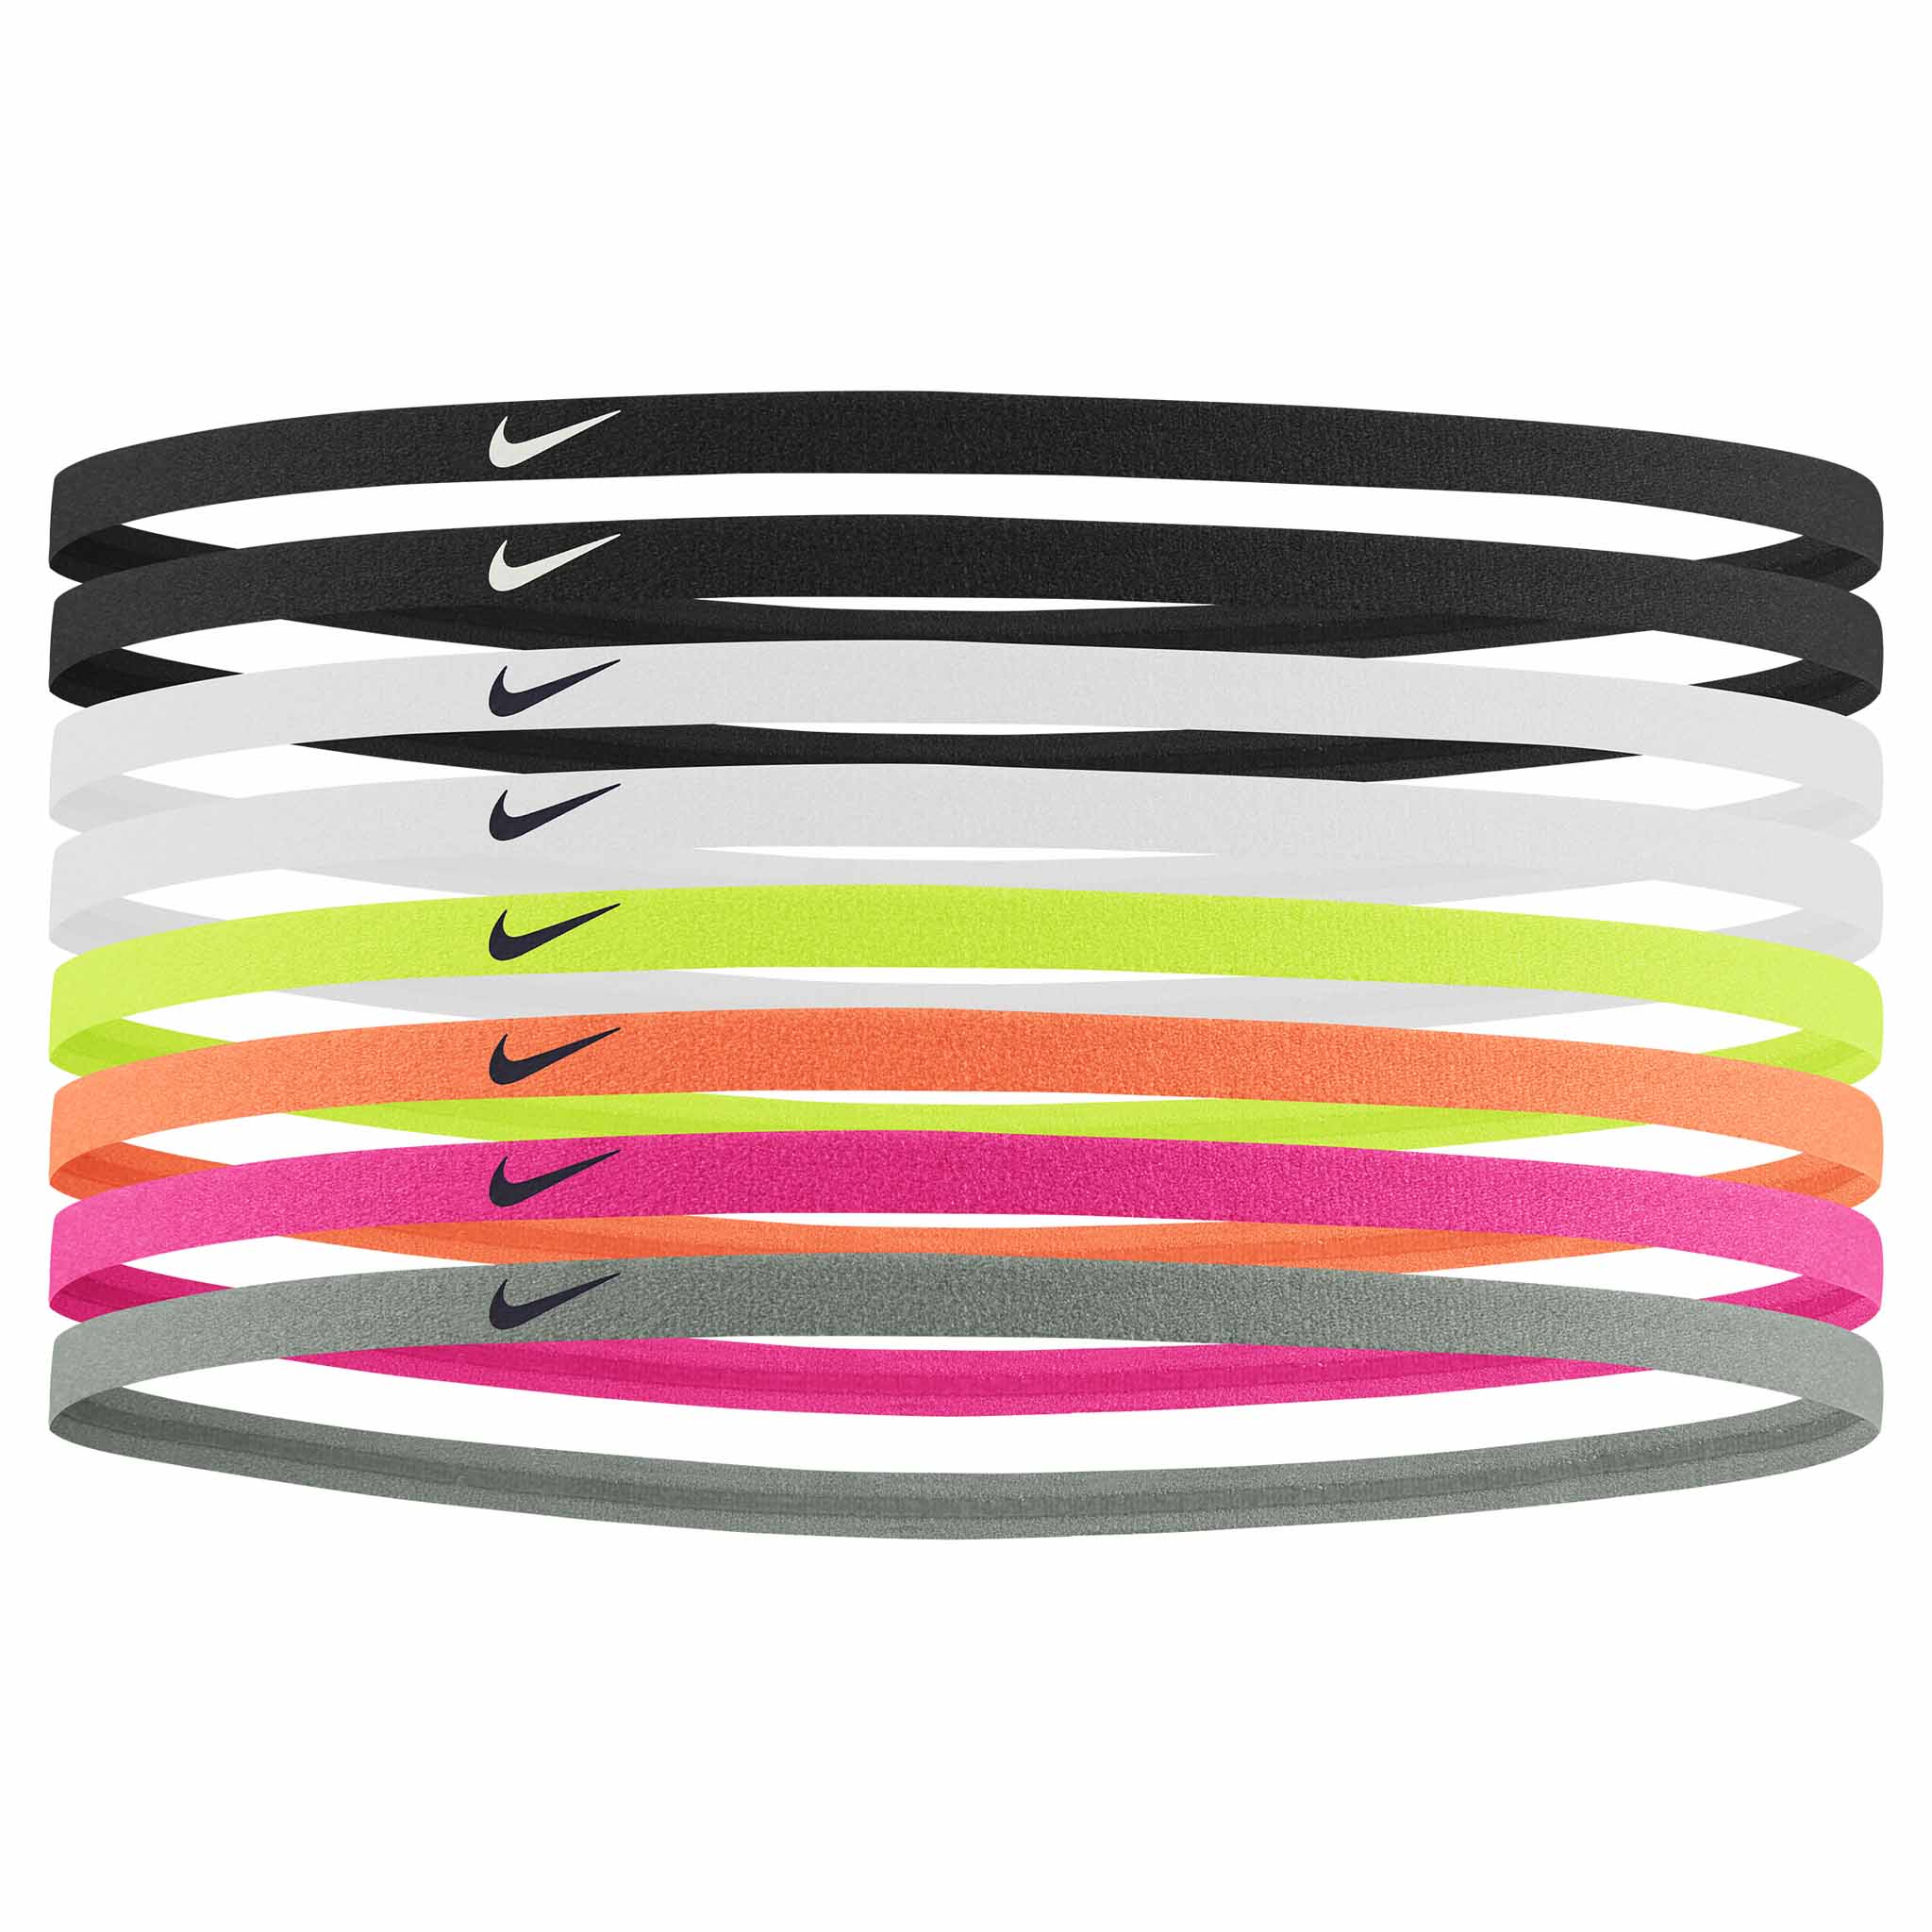 Nike thin hairbands (8 pack)